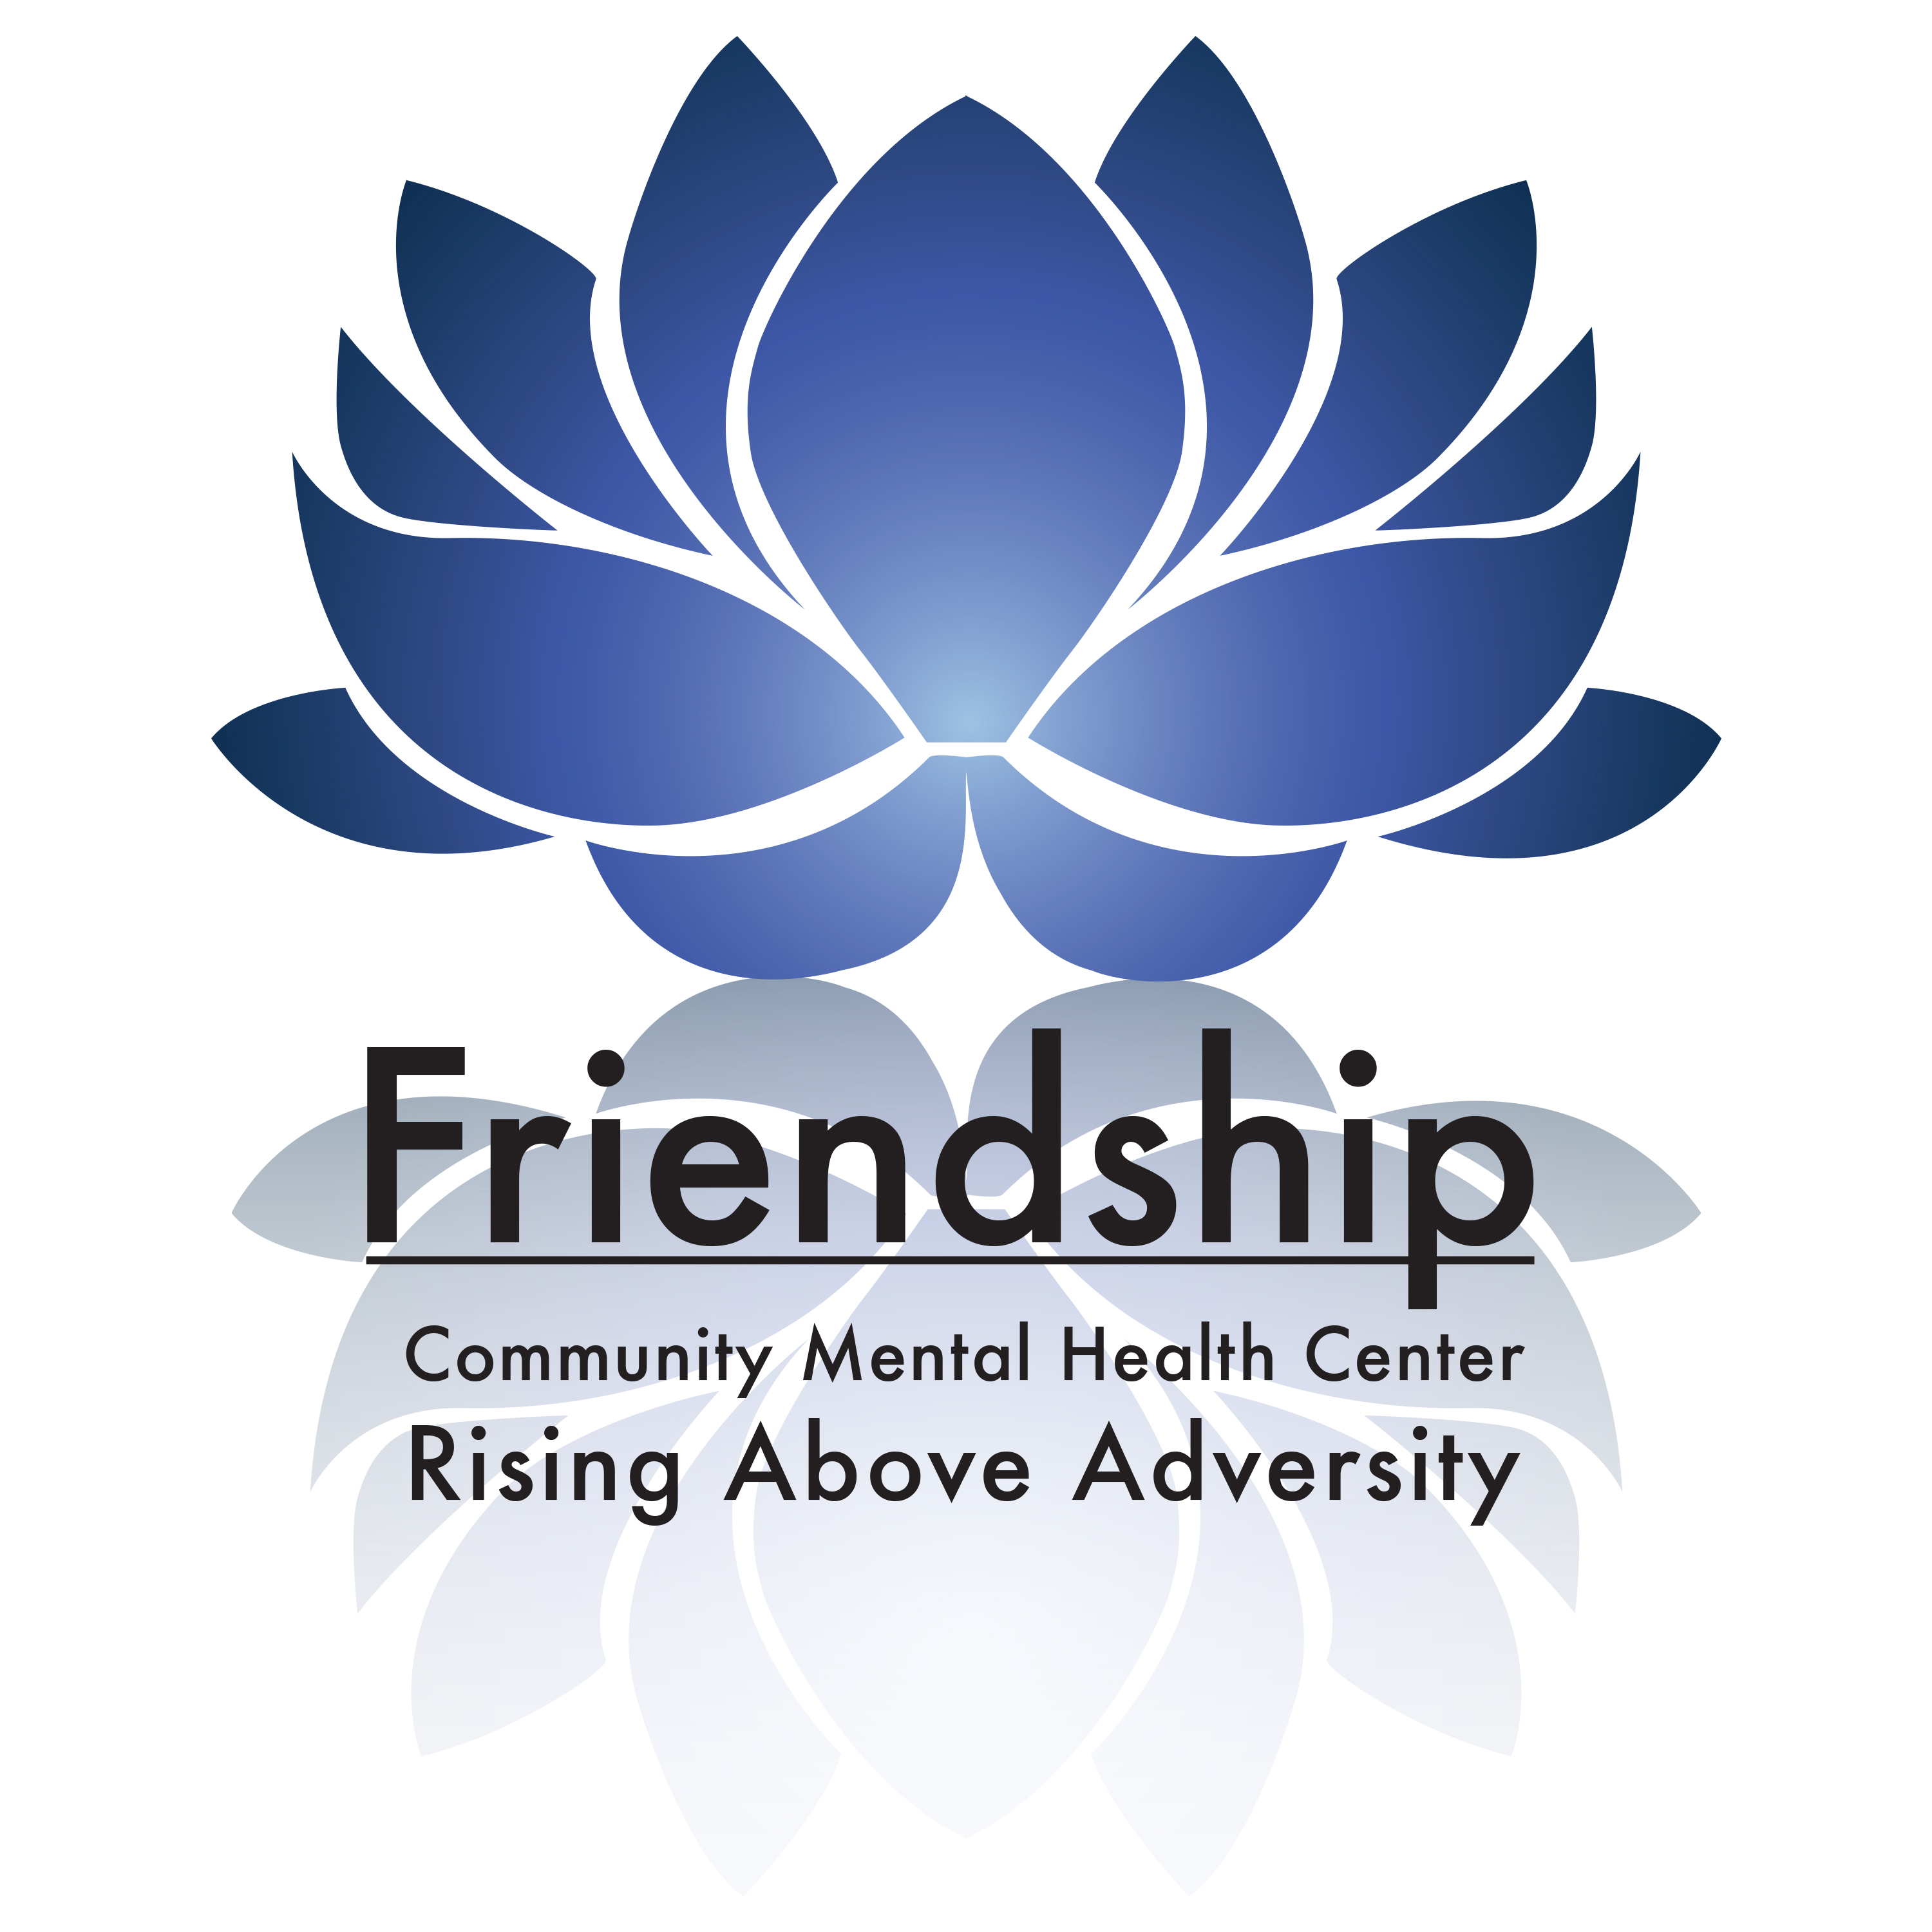 Friendship Community Mental Health Center